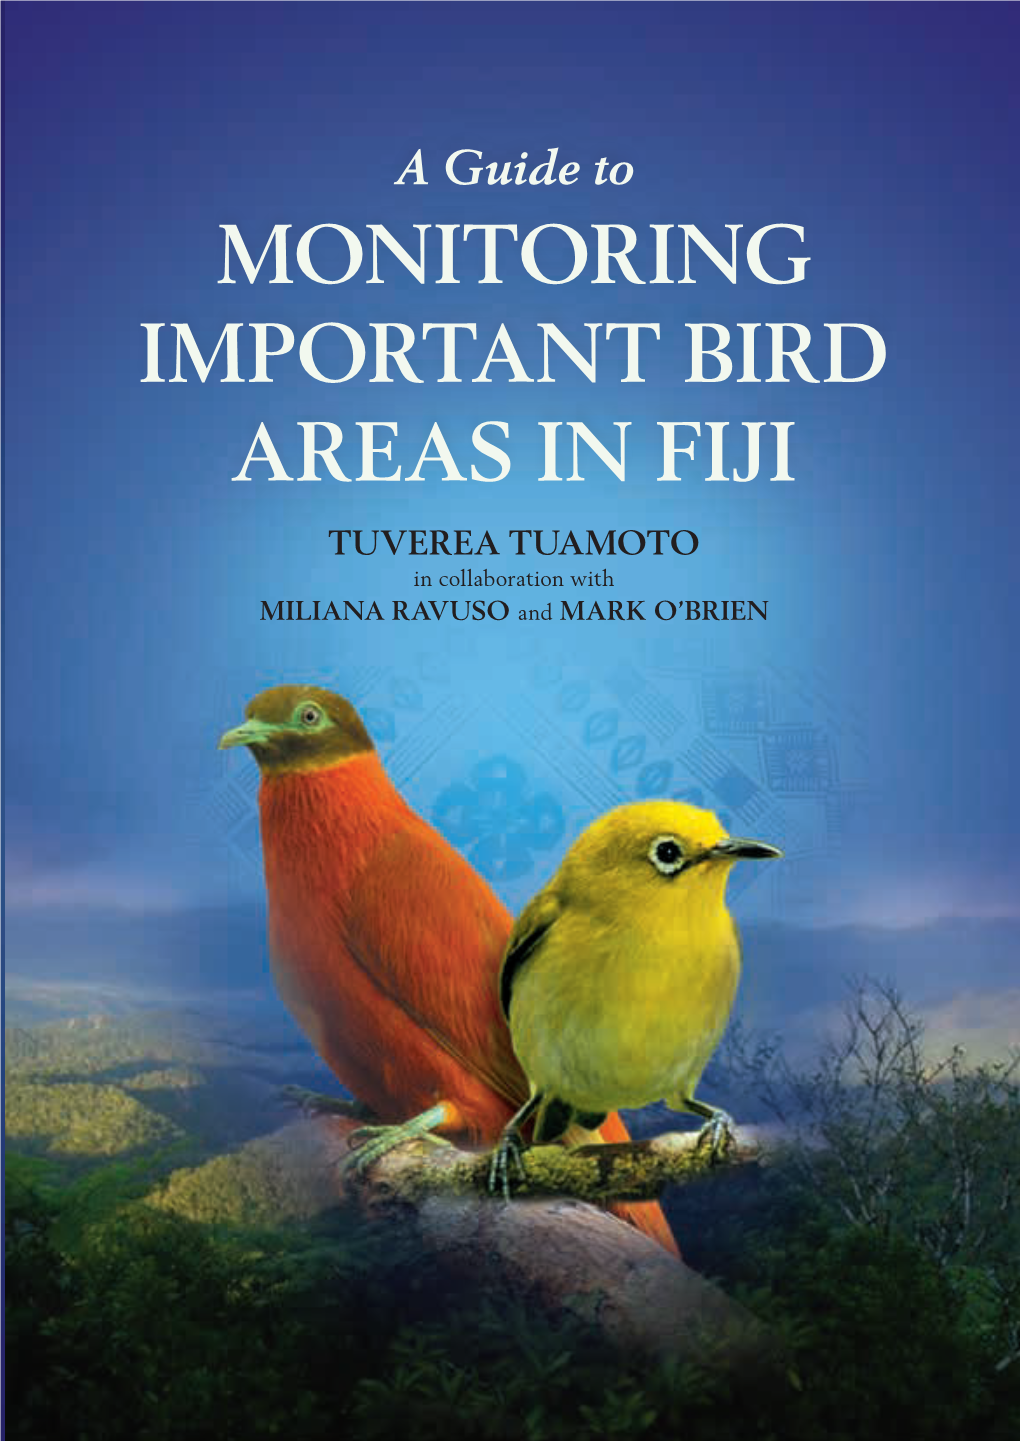 A Guide to Monitoring Important Bird Areas in Fiji. Suva, Fiji Islands: Birdlife International Pacific Partnership Secretariat